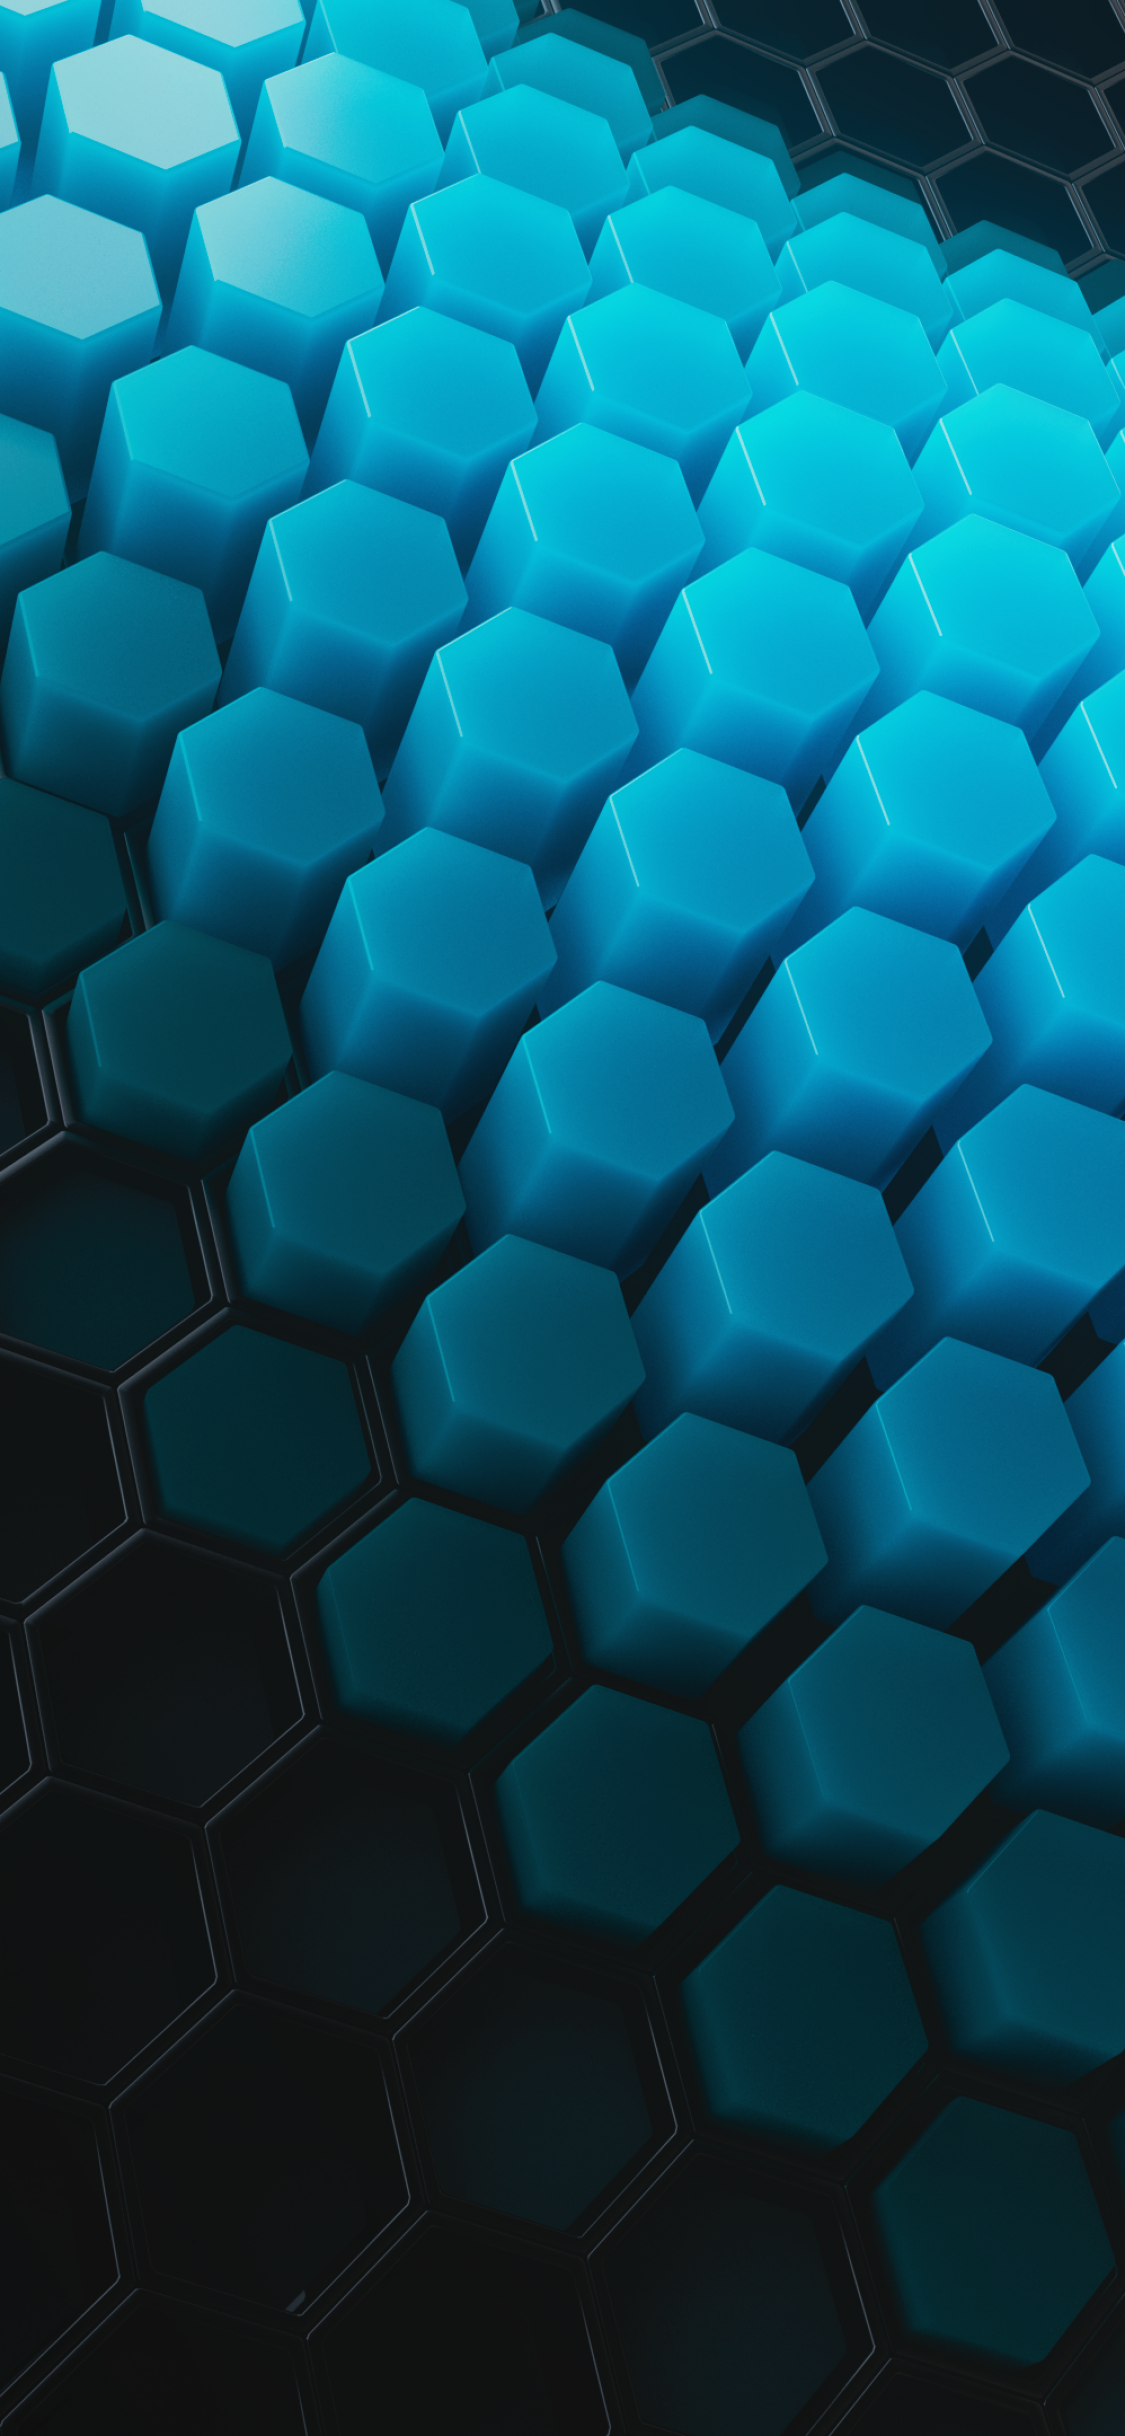 Hexagons 4K Wallpaper, Patterns, Cyan background, Cyan